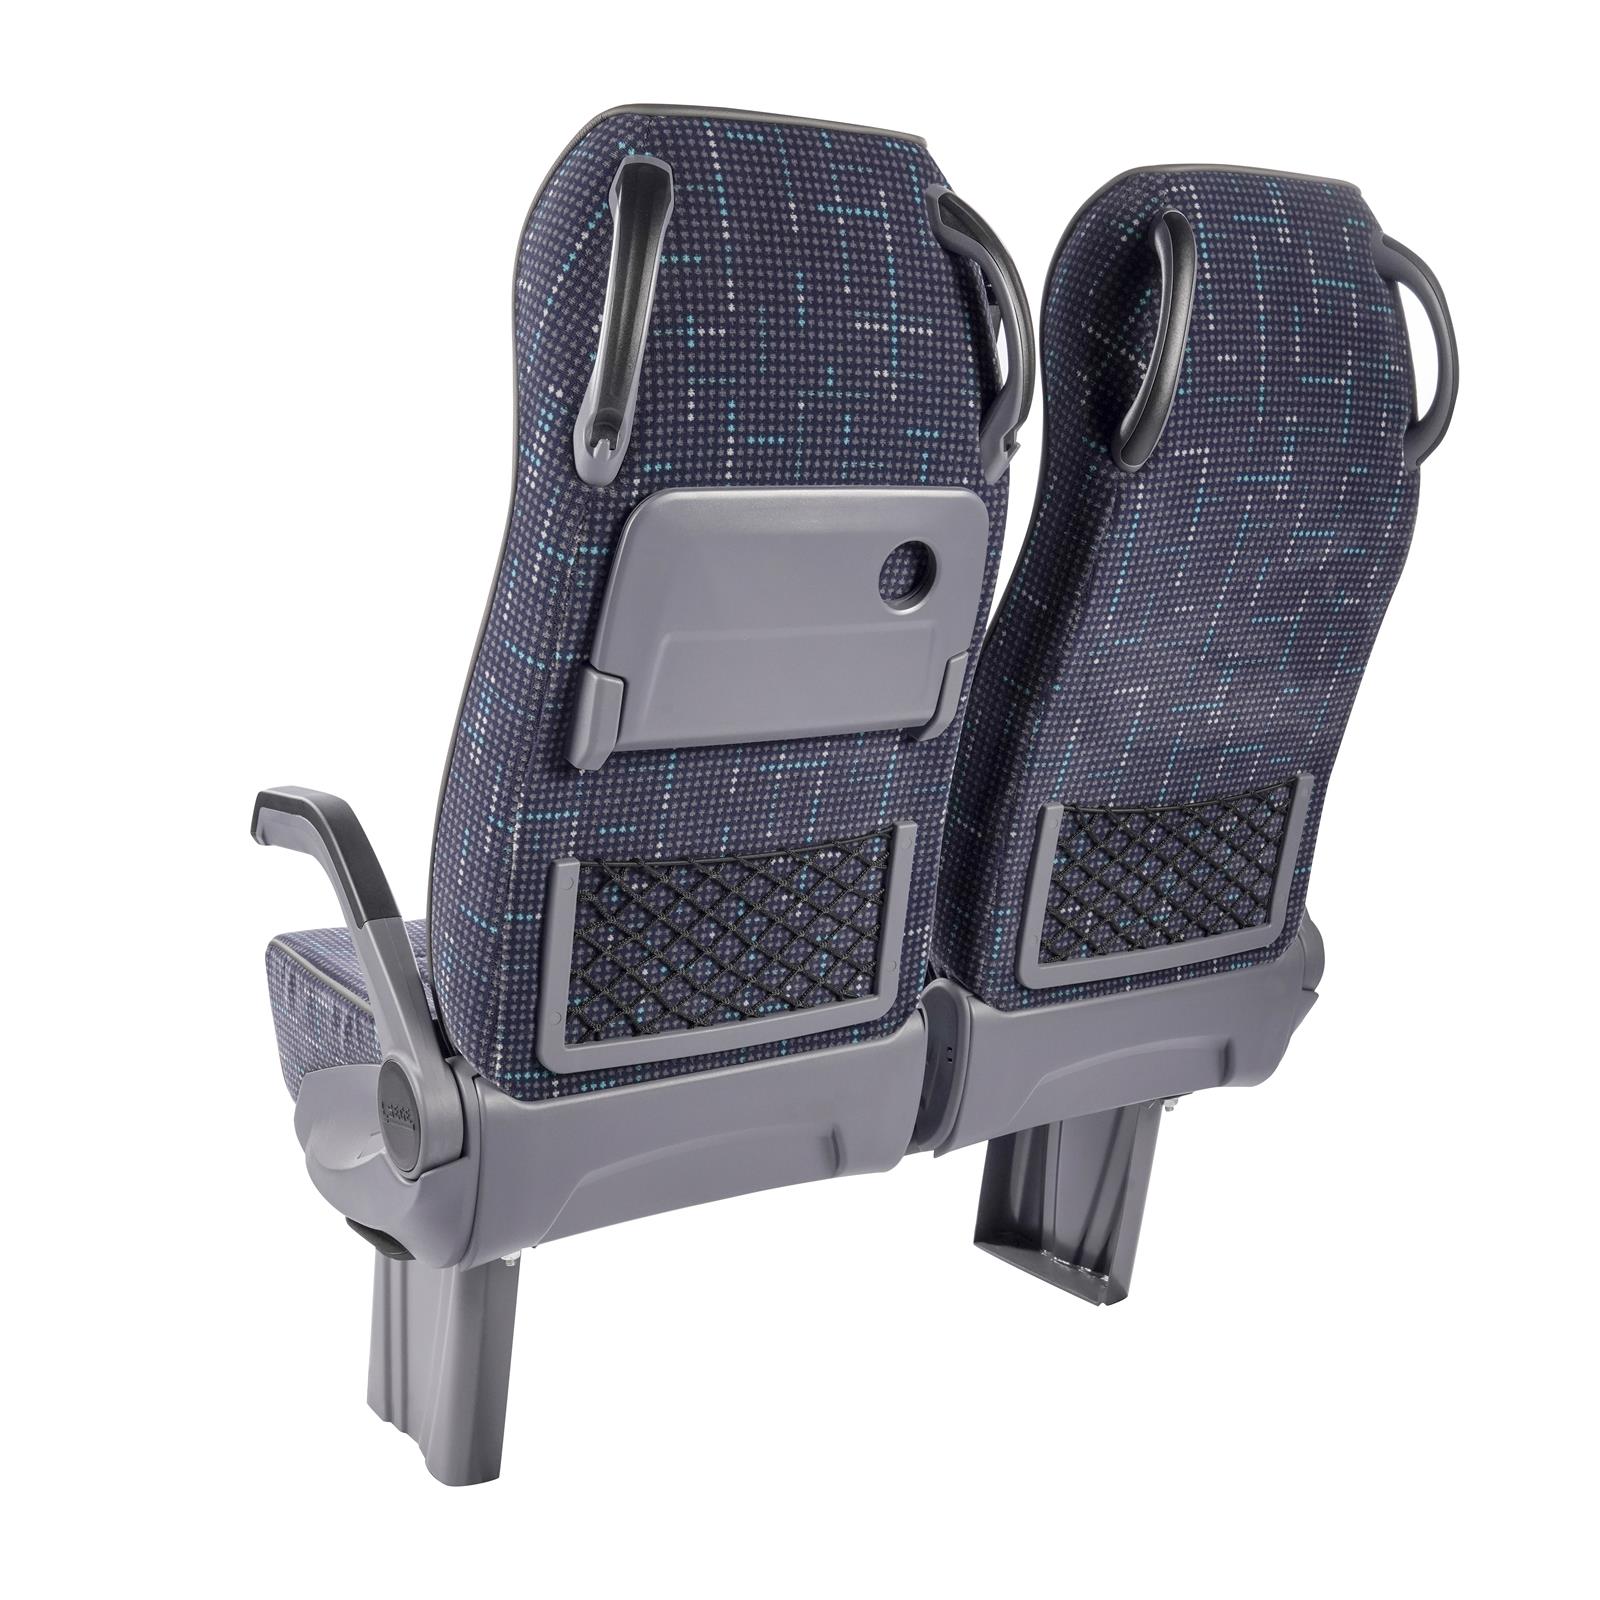 image shows the sege passenger 4030x bus seat